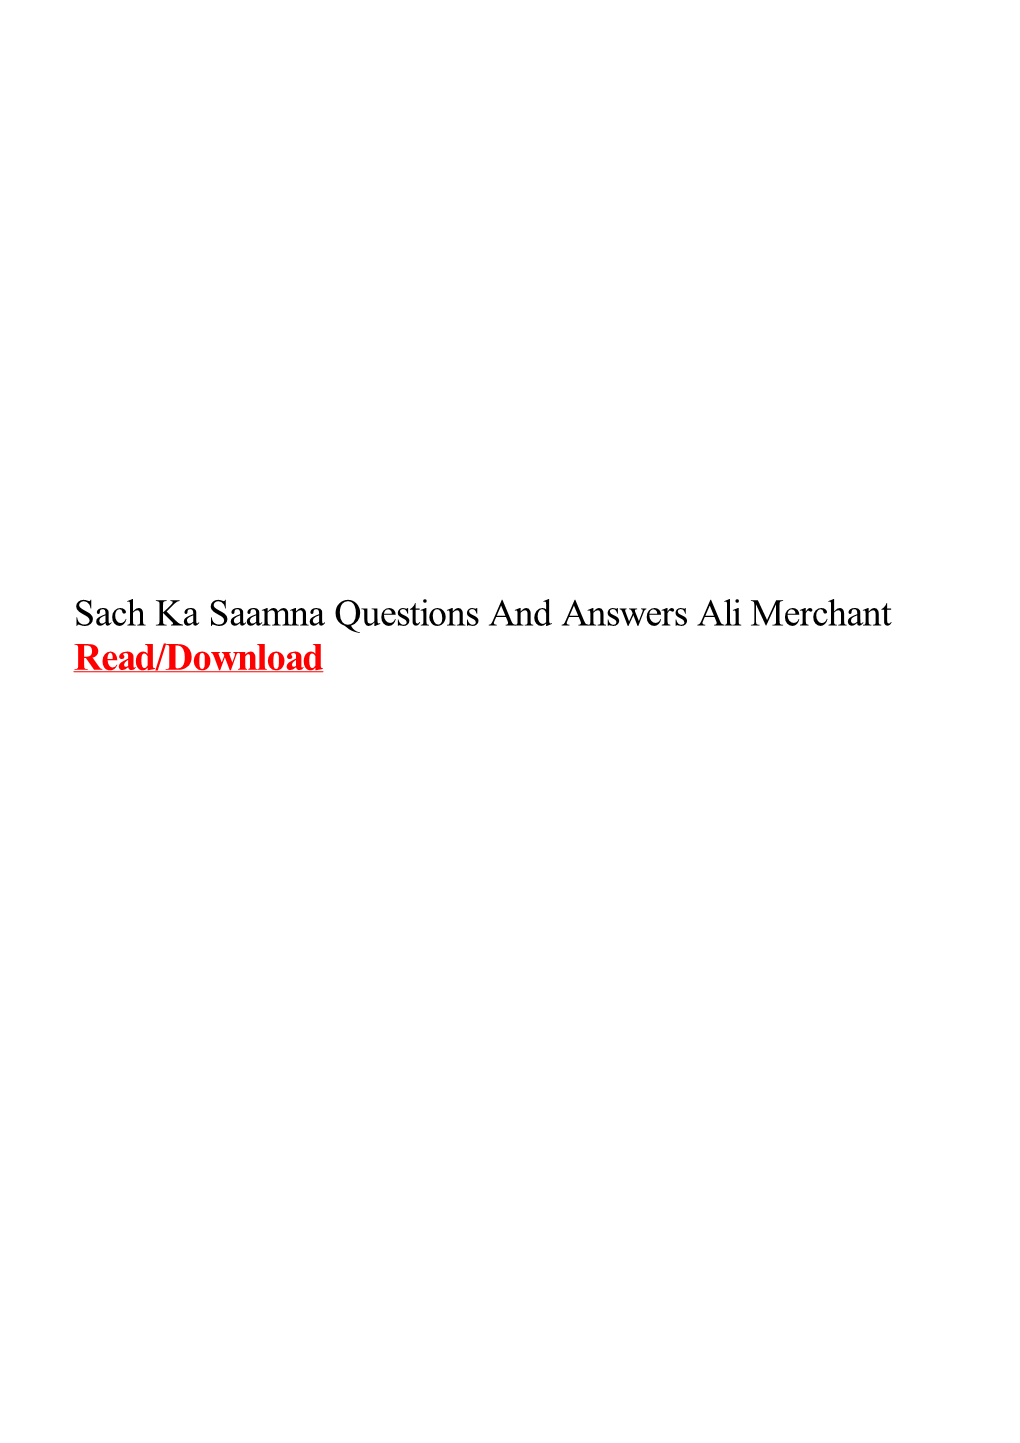 Sach Ka Saamna Questions and Answers Ali Merchant.Pdf